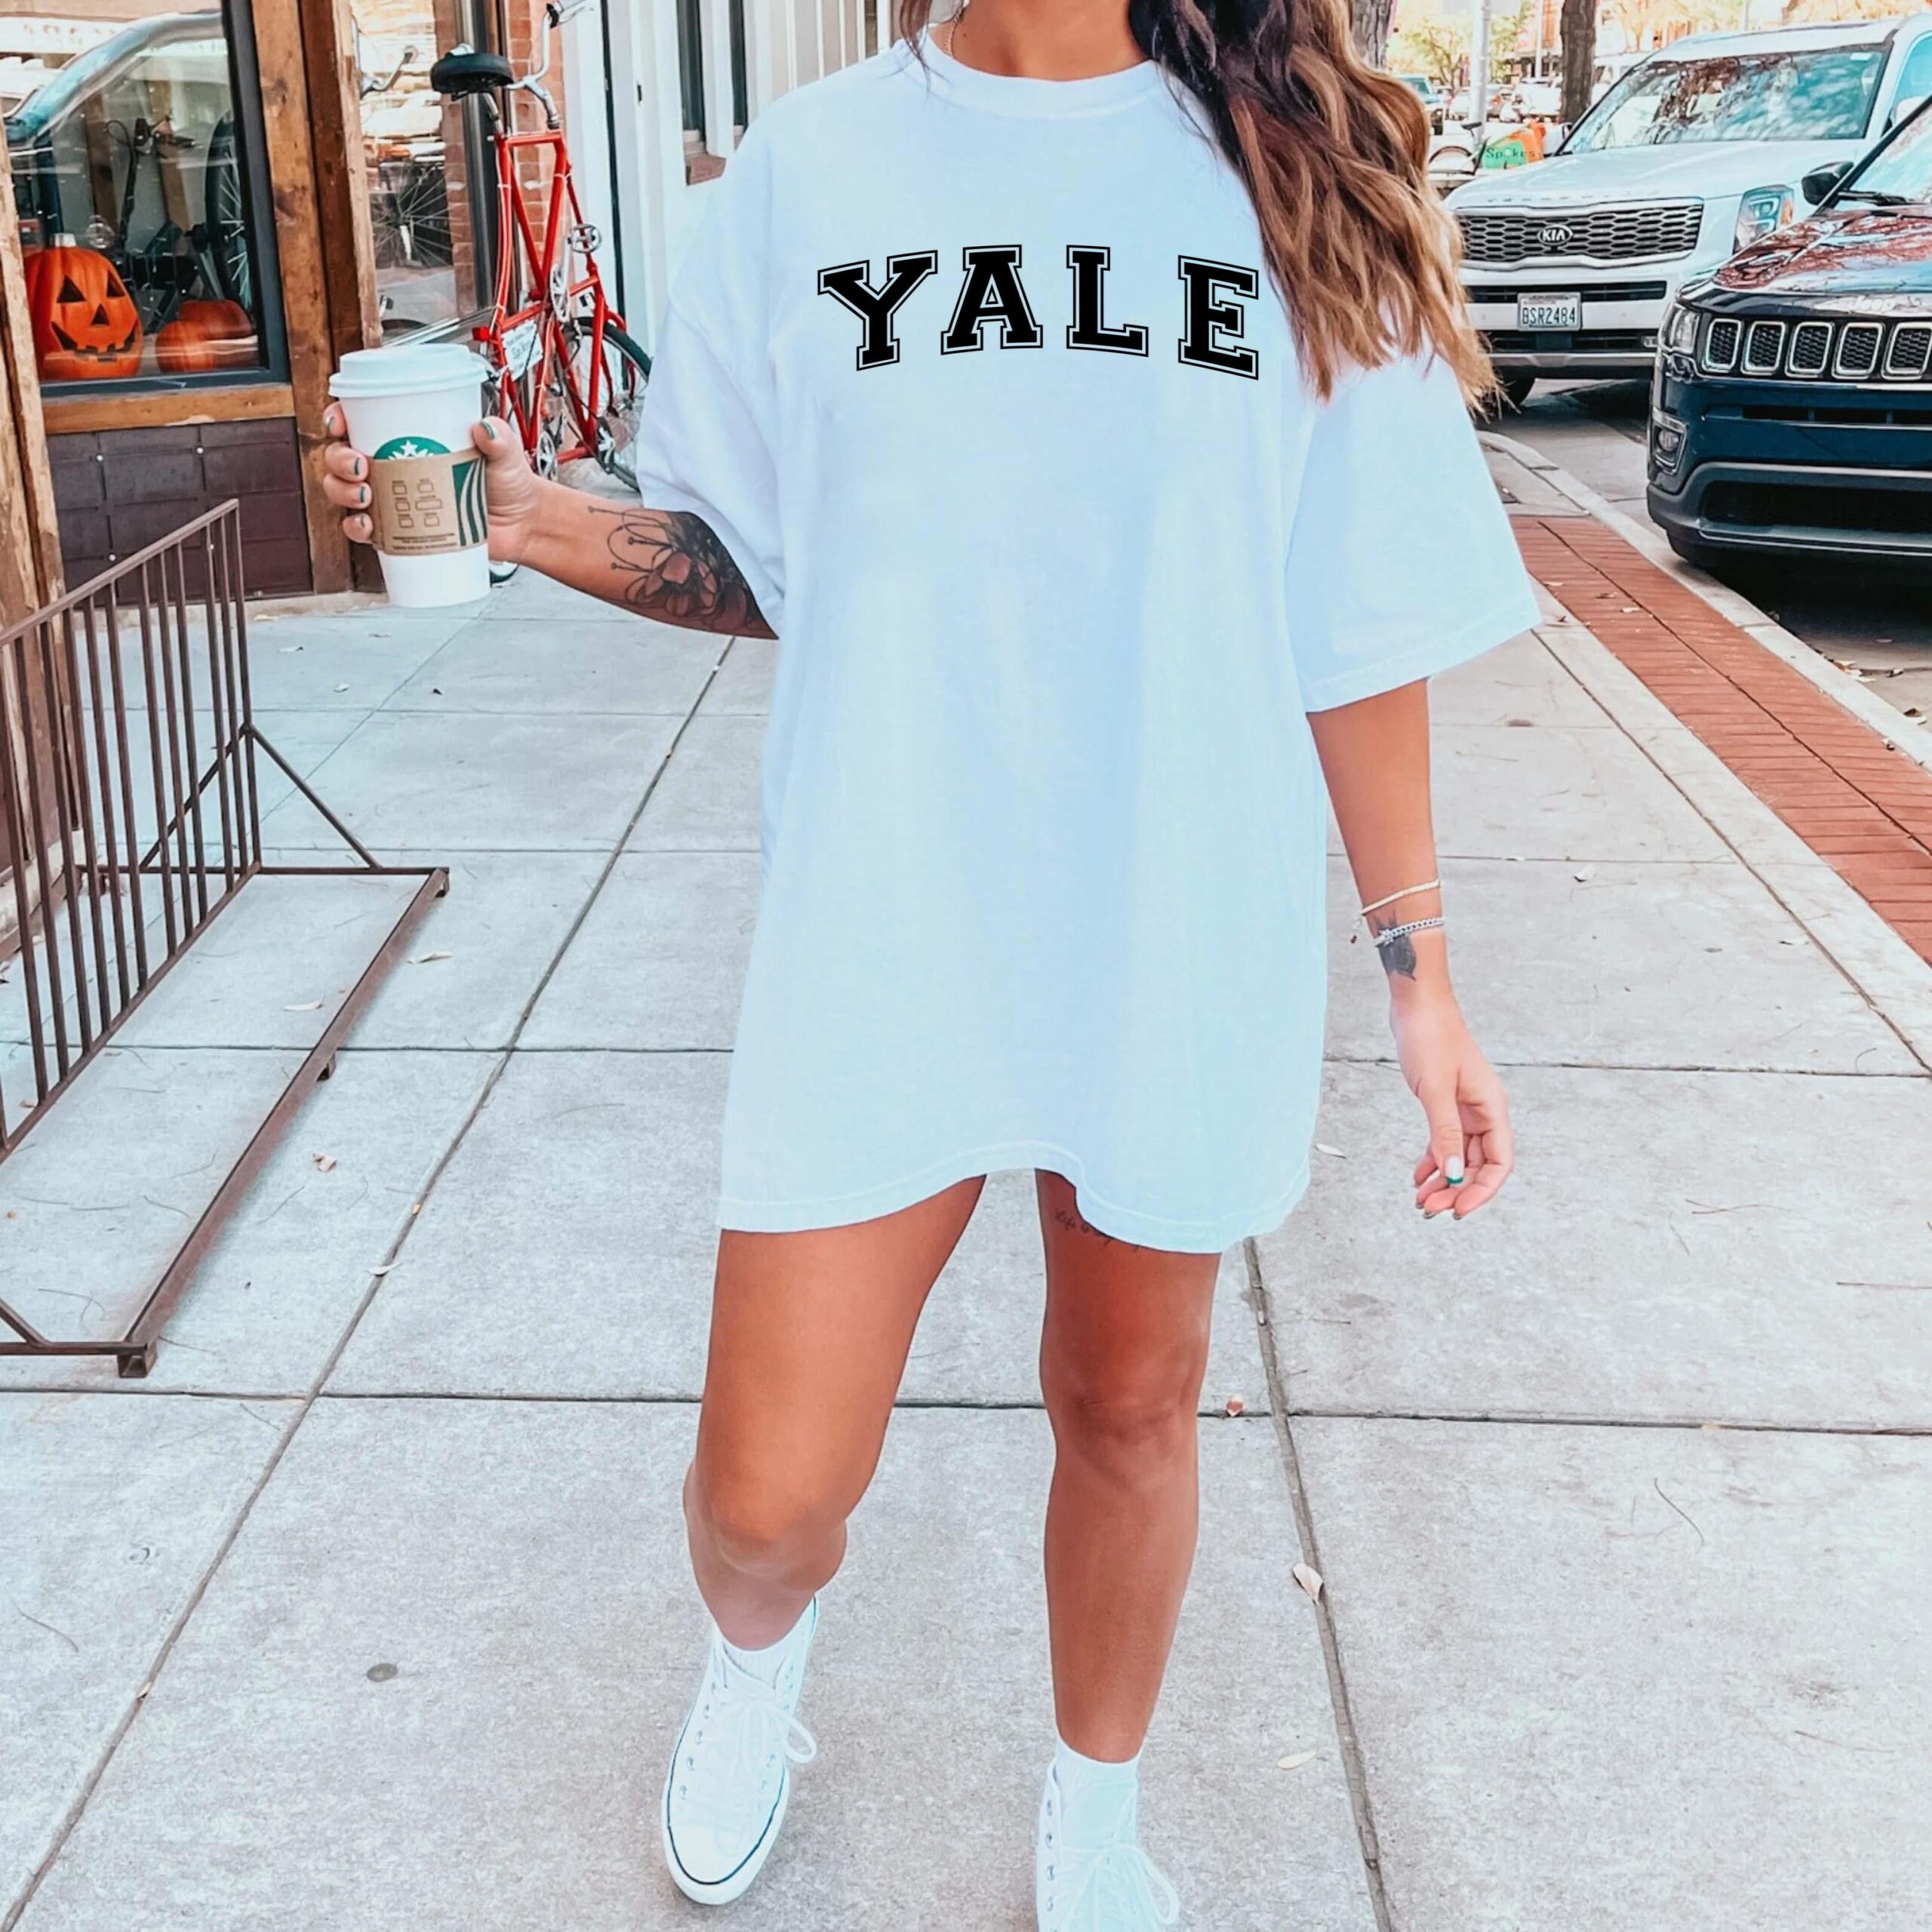 Yale Unisex Sweatshirt - Yale university - Yale crewneck - Yale sweater - Yale shirt - Vintage Yale Sweatshirt - College Sweatshirt